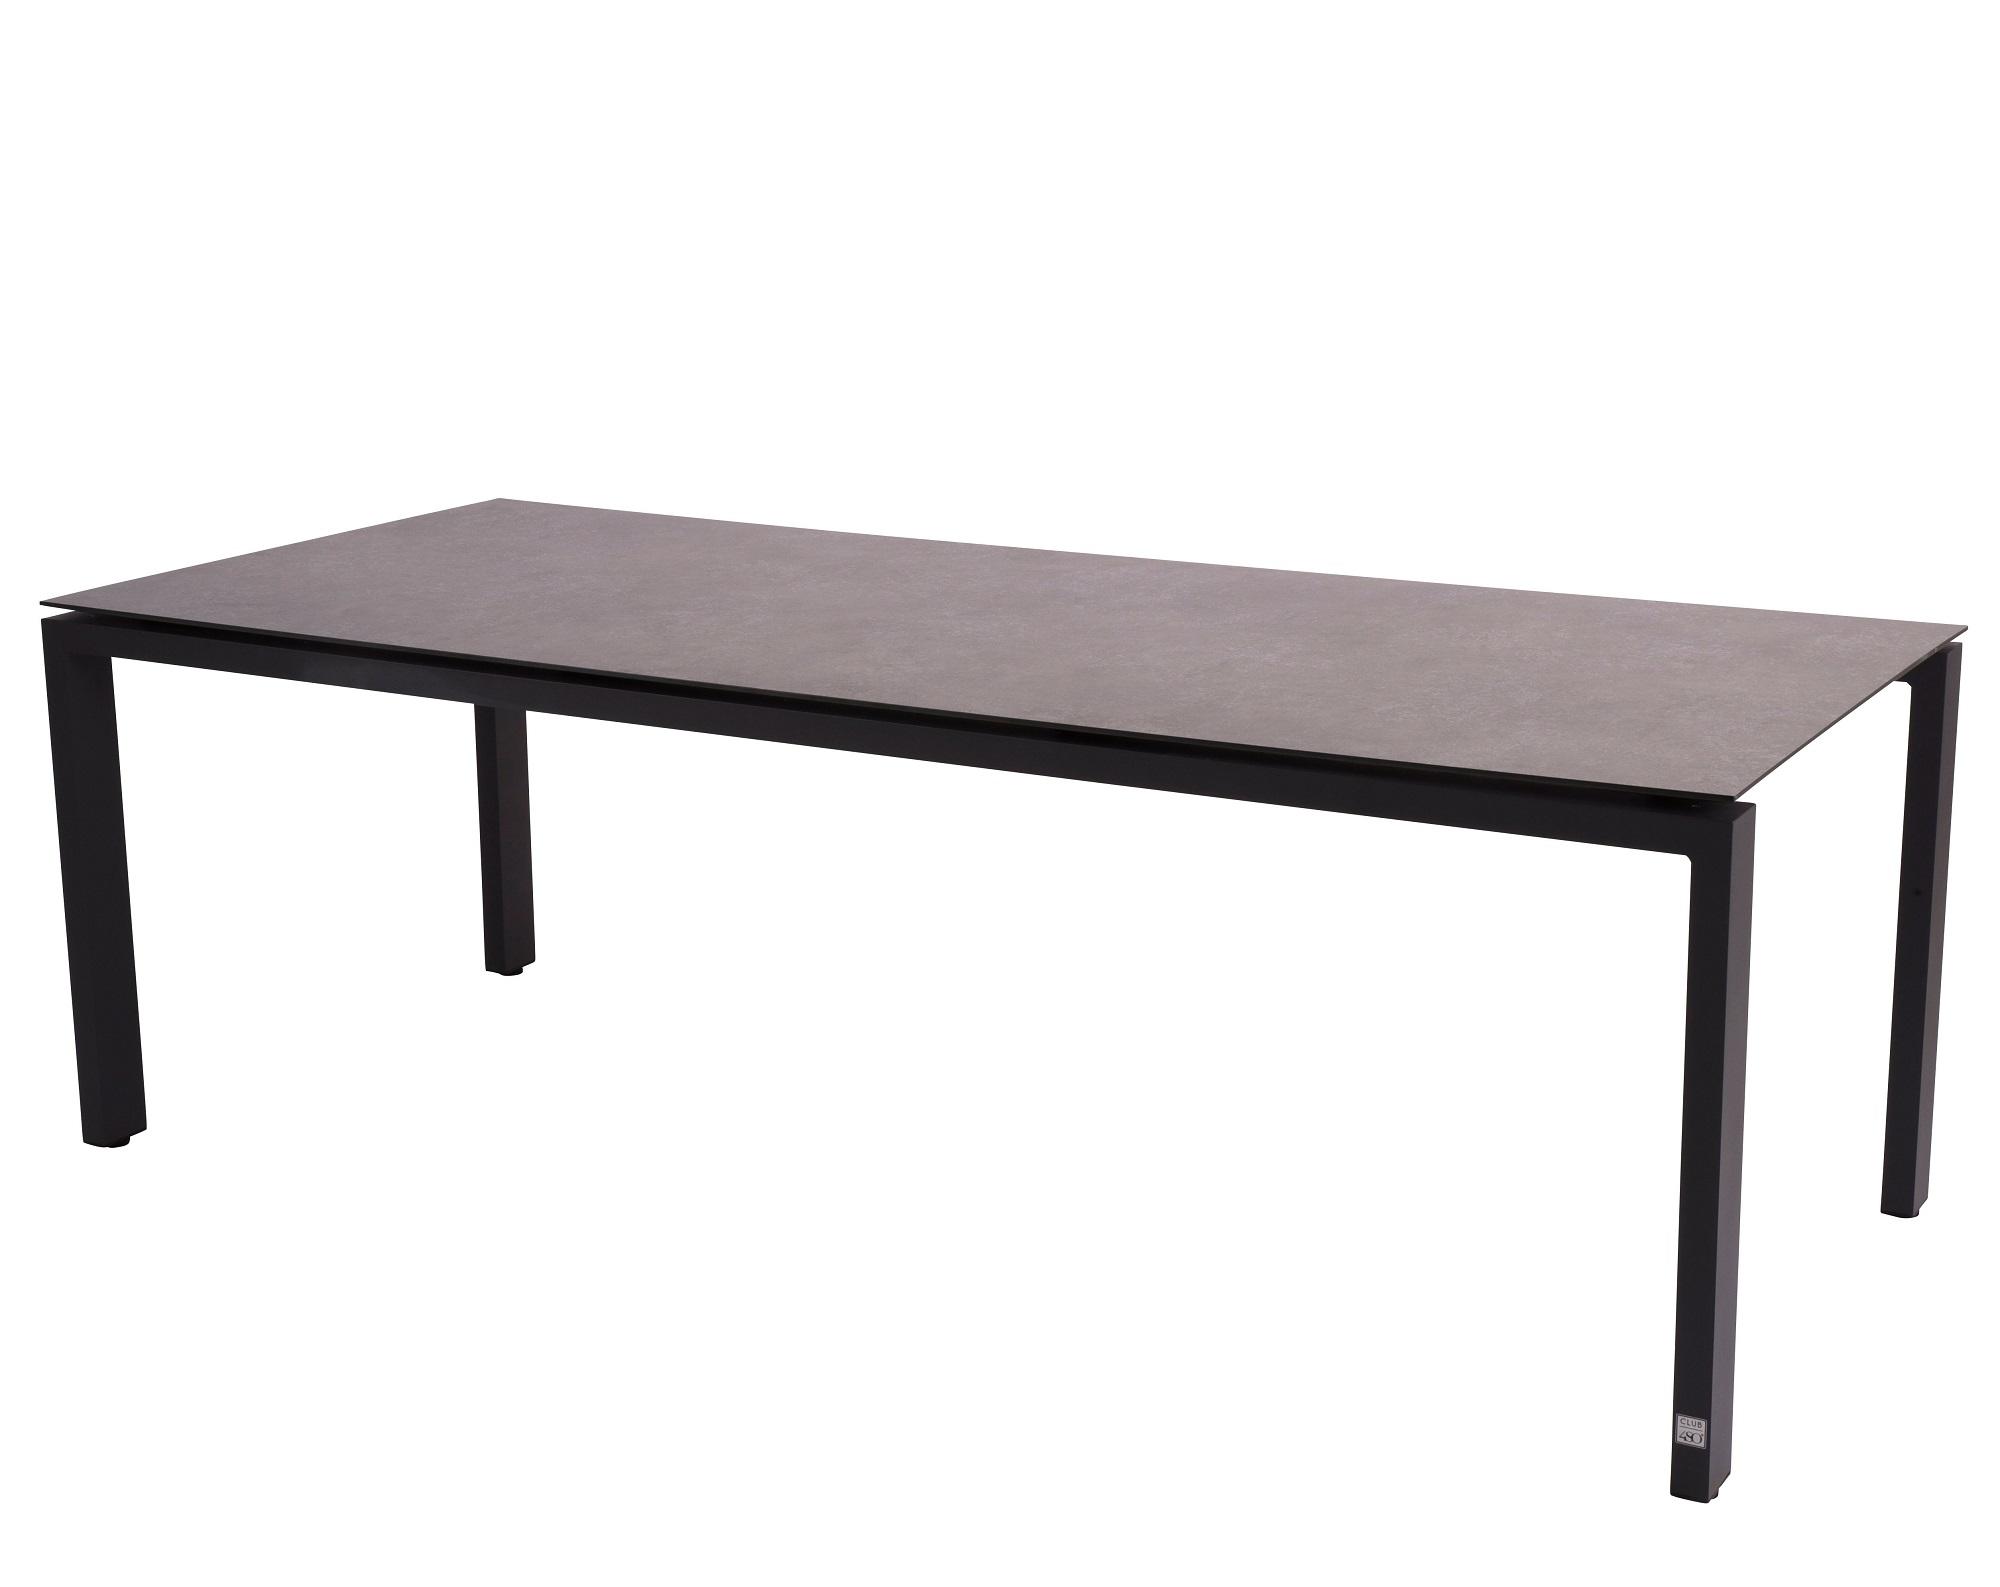 220 cm grey slate effect grey HPL table top and aluminium frame patio garden dining table